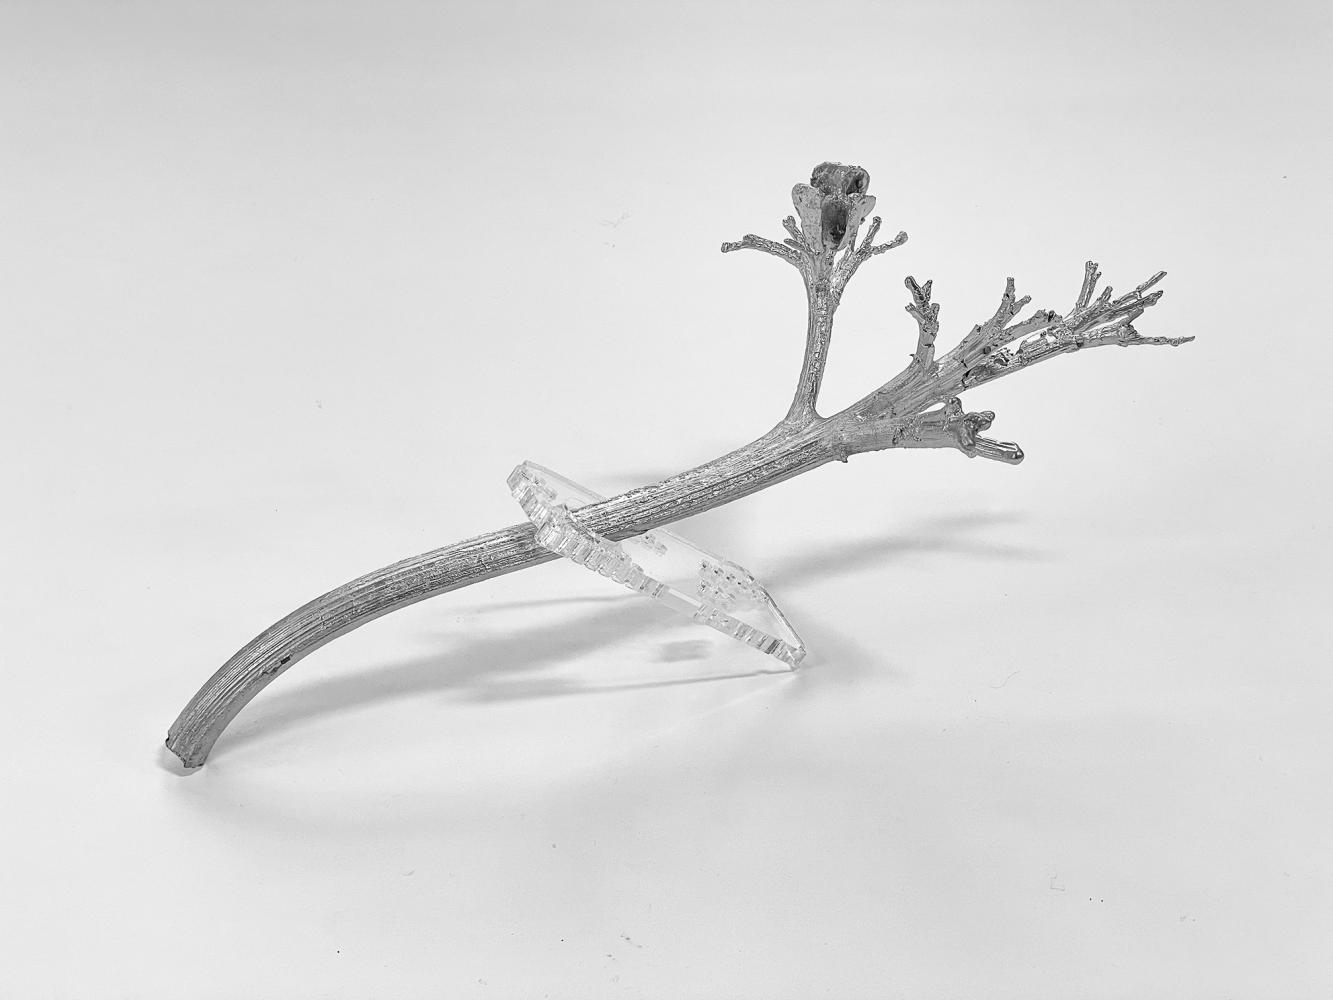 Malte Bartsch "Agave", 2021, Aluminium cast, plexiglass, 20 x 12 x 10 cm